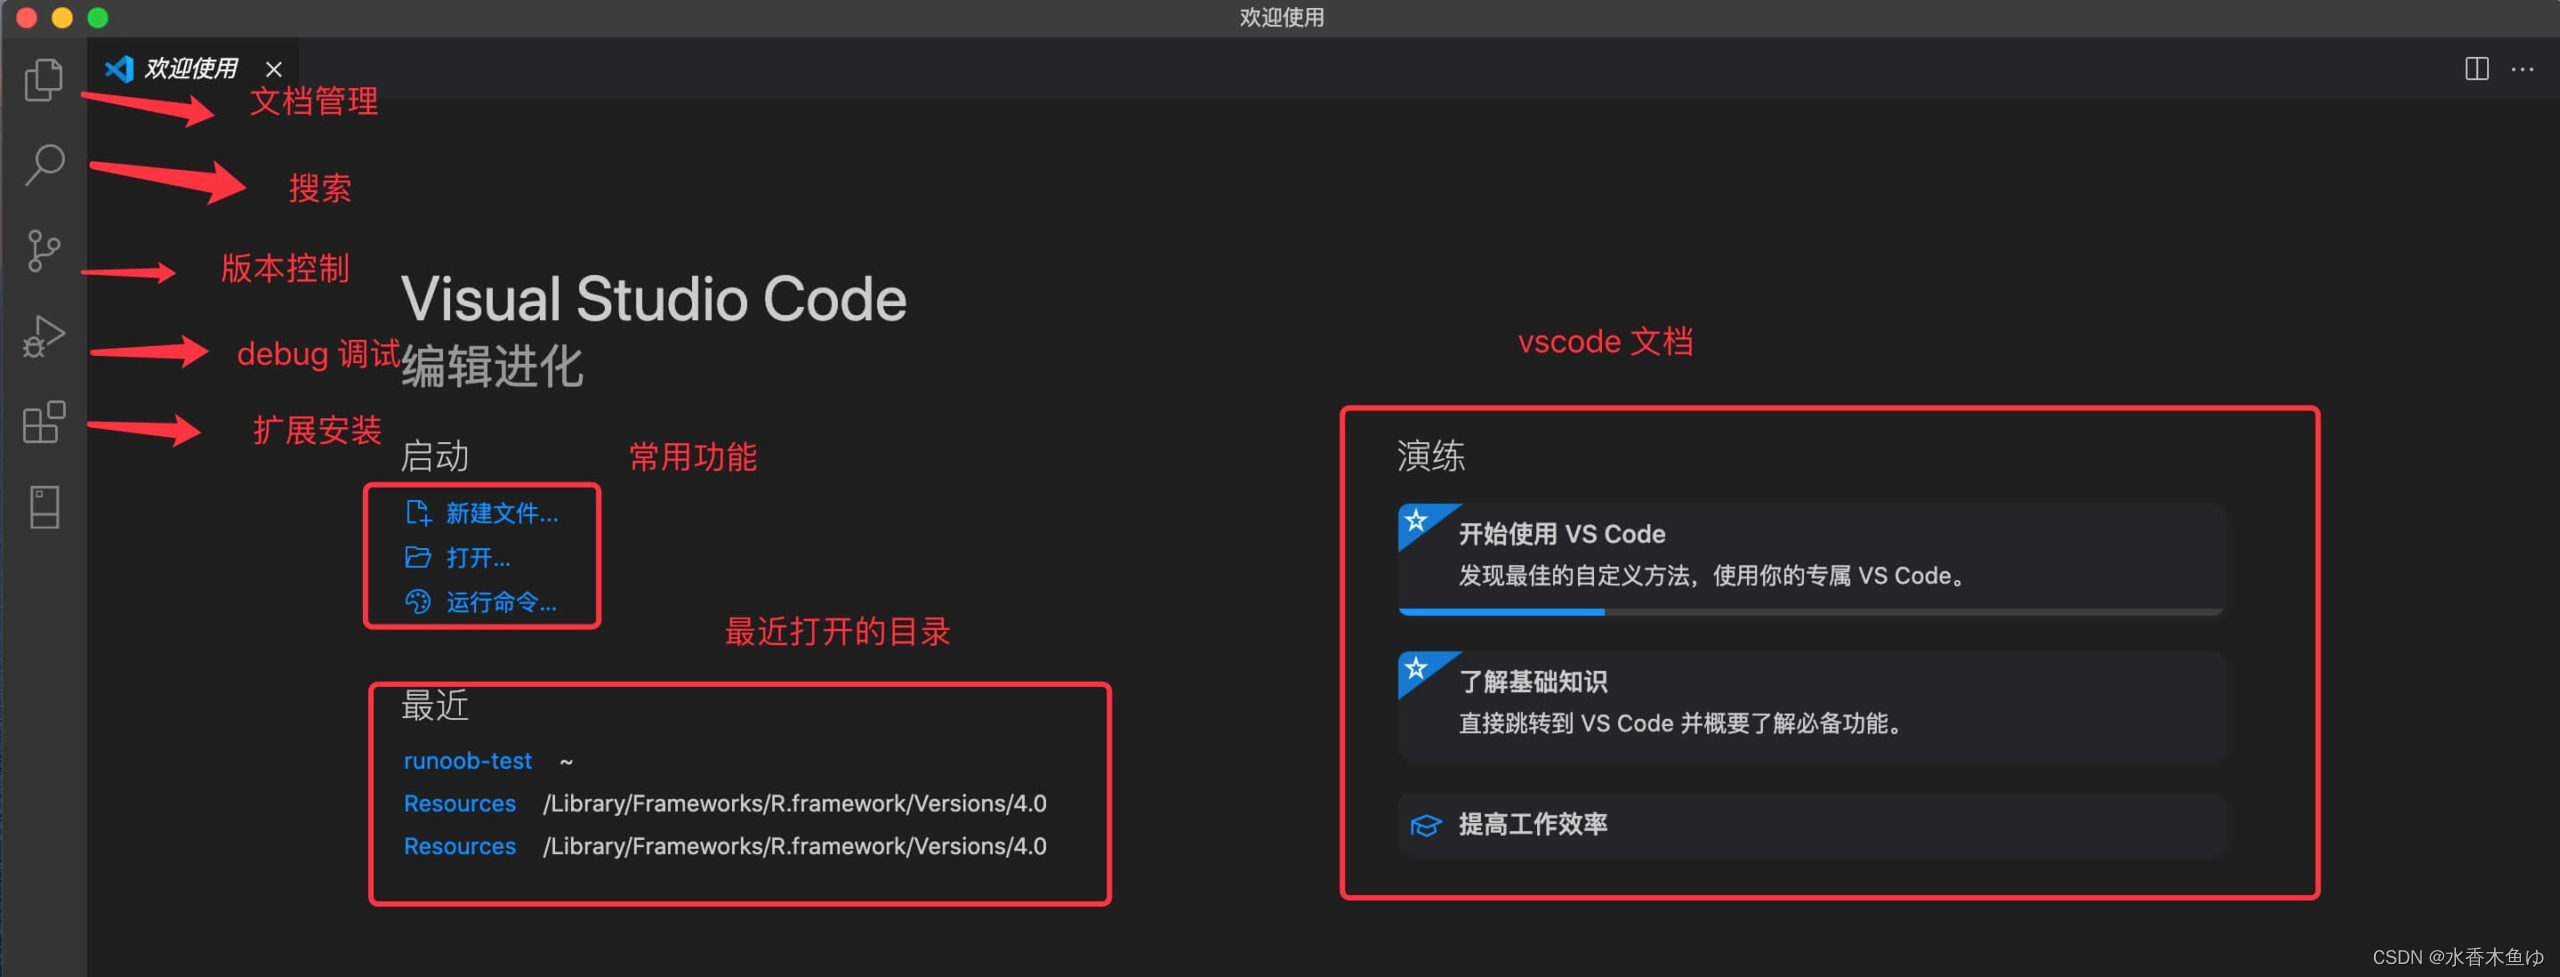 初学前端必备的Visual Studio Code编辑器_vscode_12